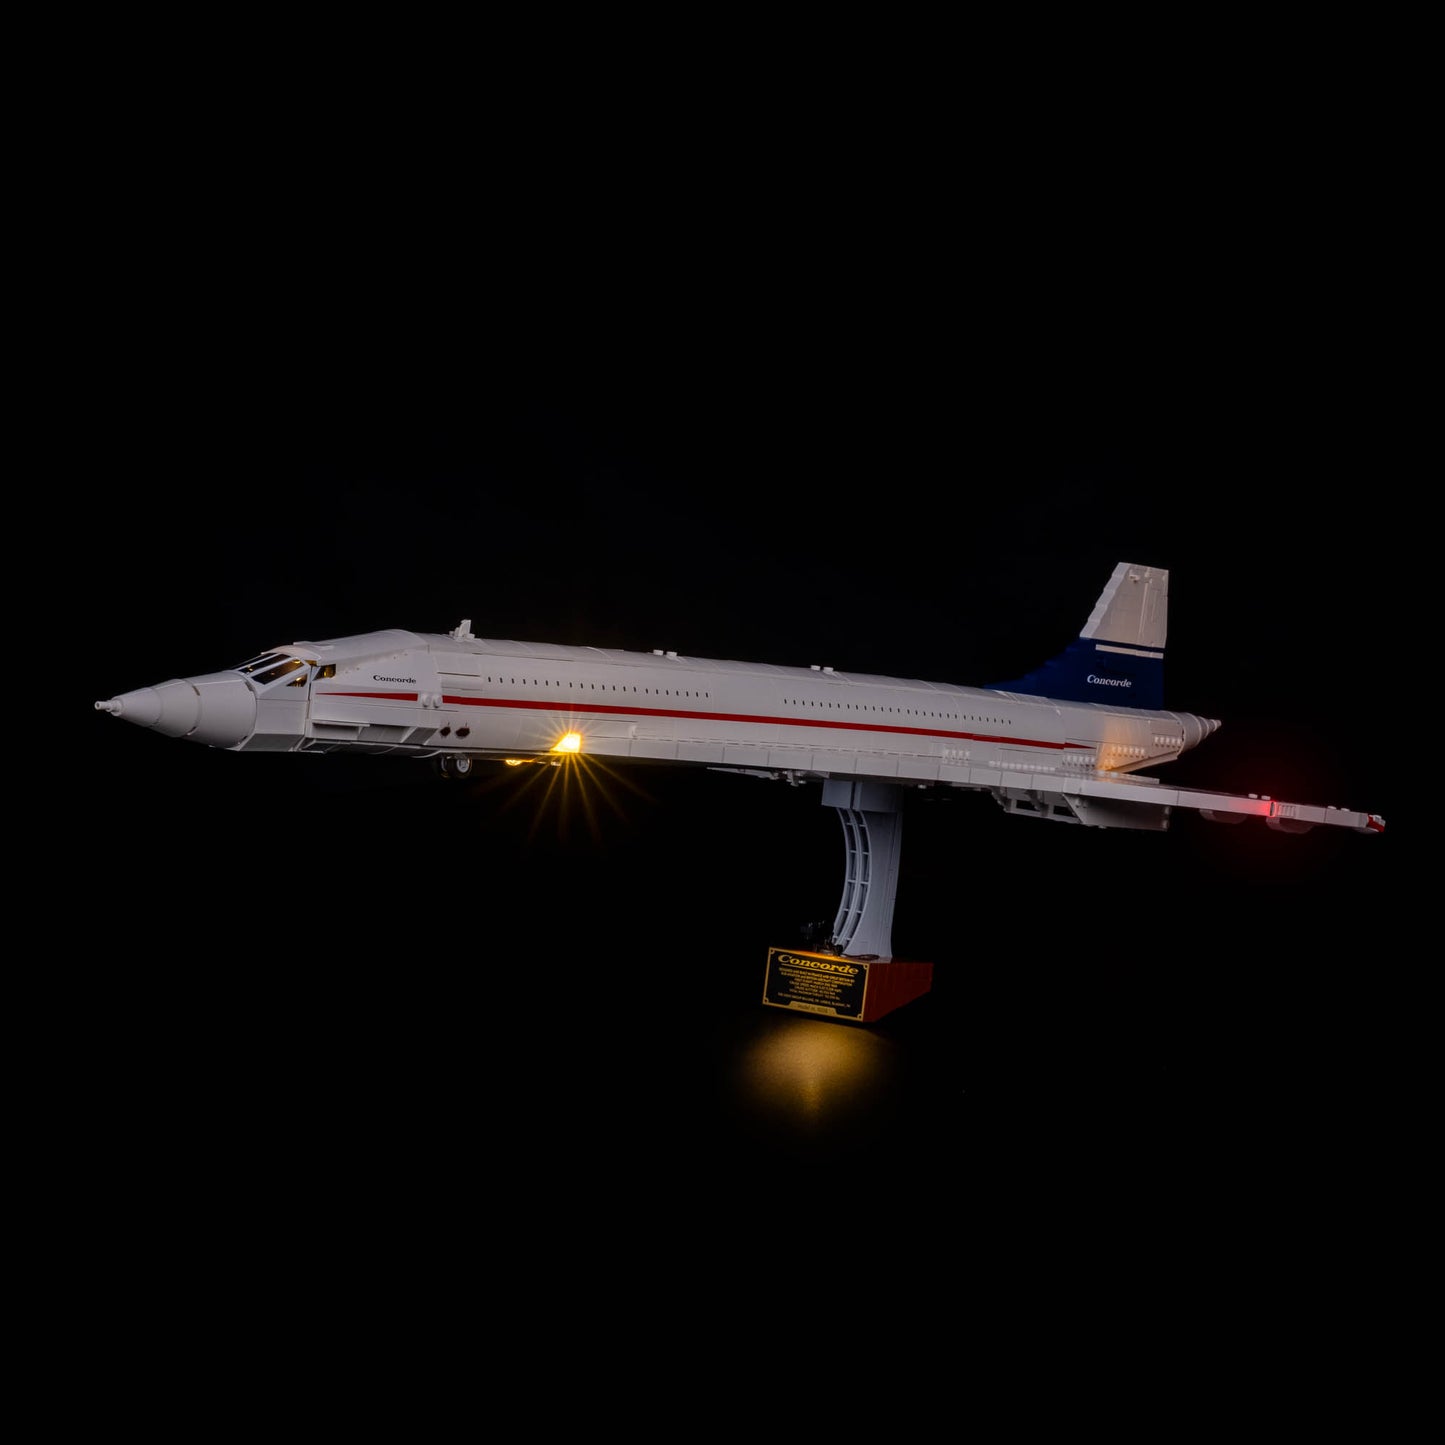 LMB Concorde (10318) Lighting Kit